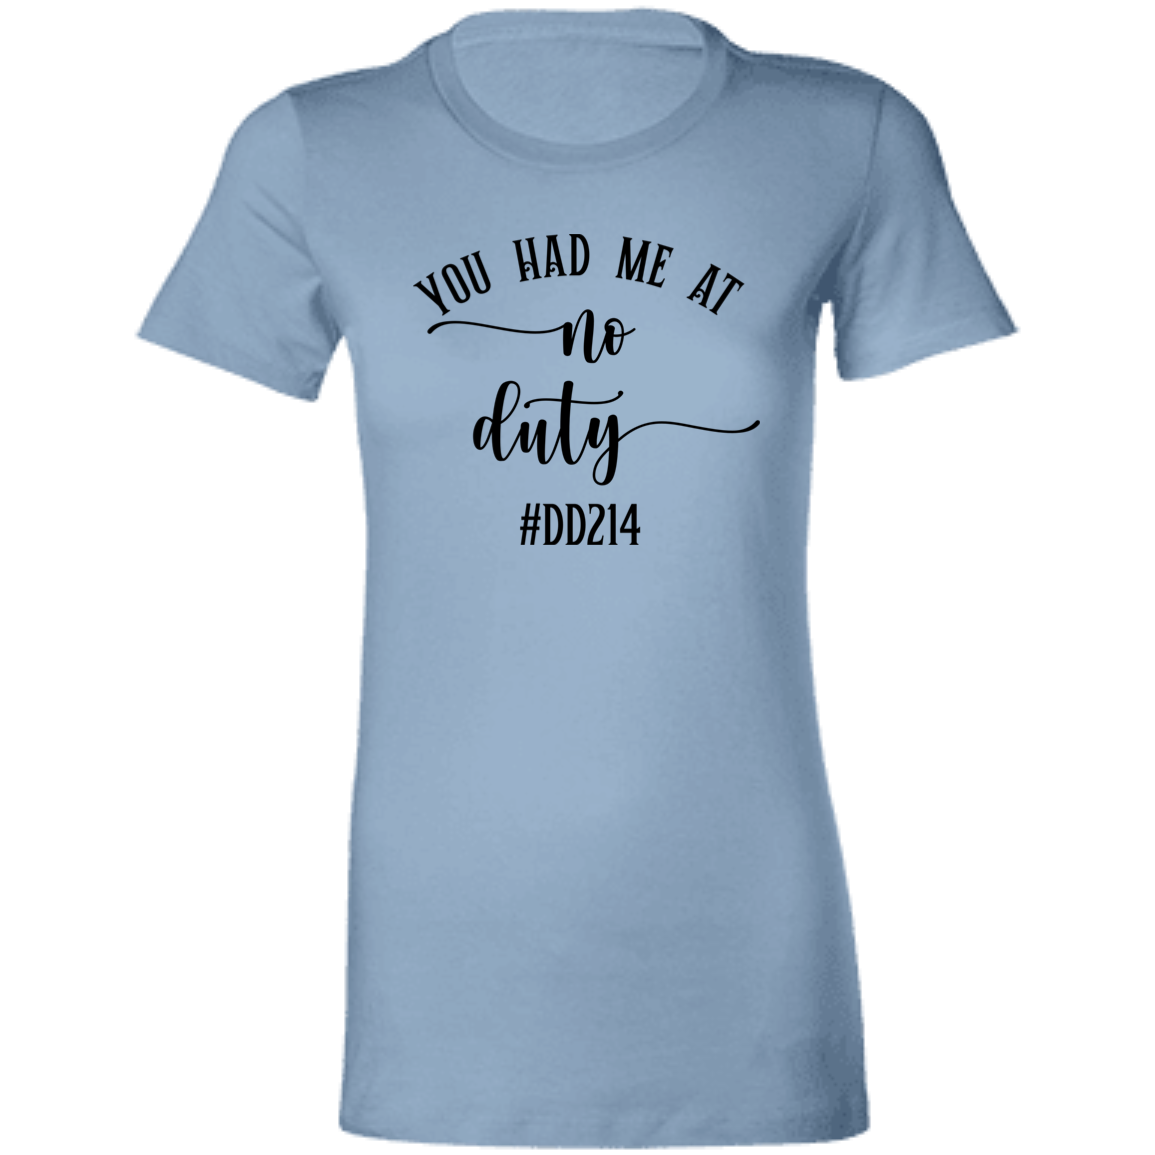 No Duty Ladies' Favorite T-Shirt